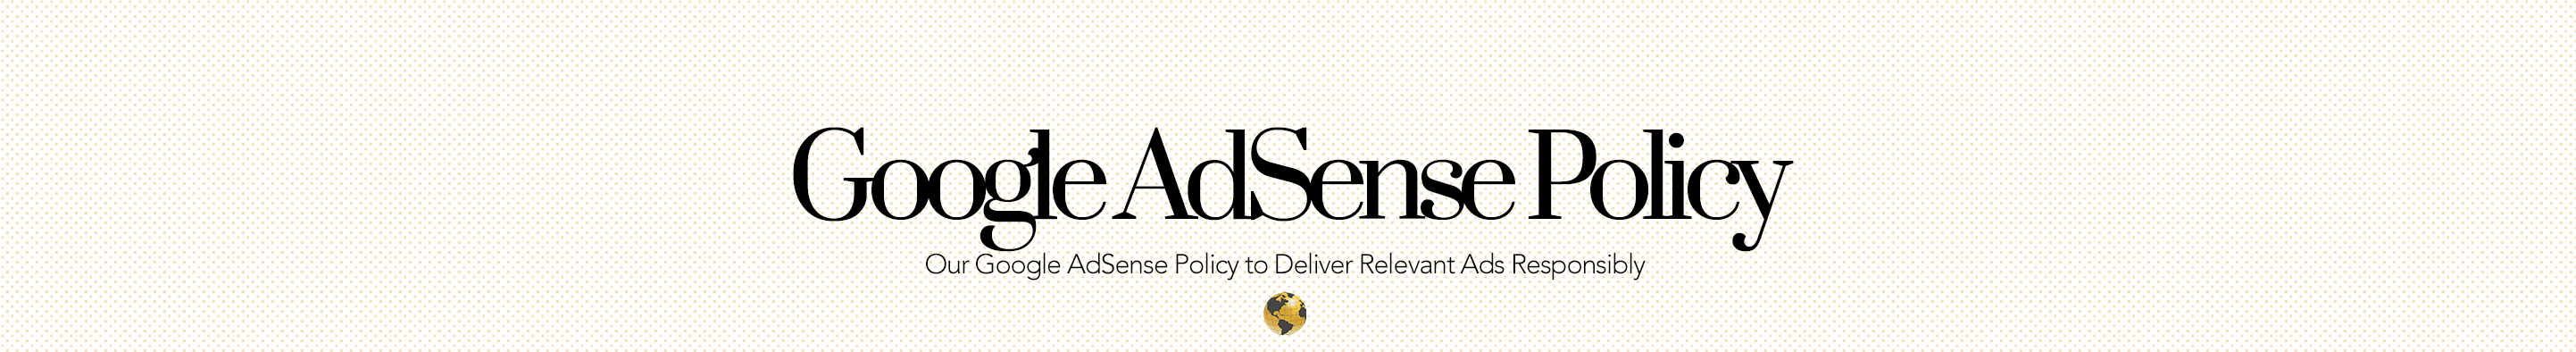 TOG Google AdSense Policy PAGE